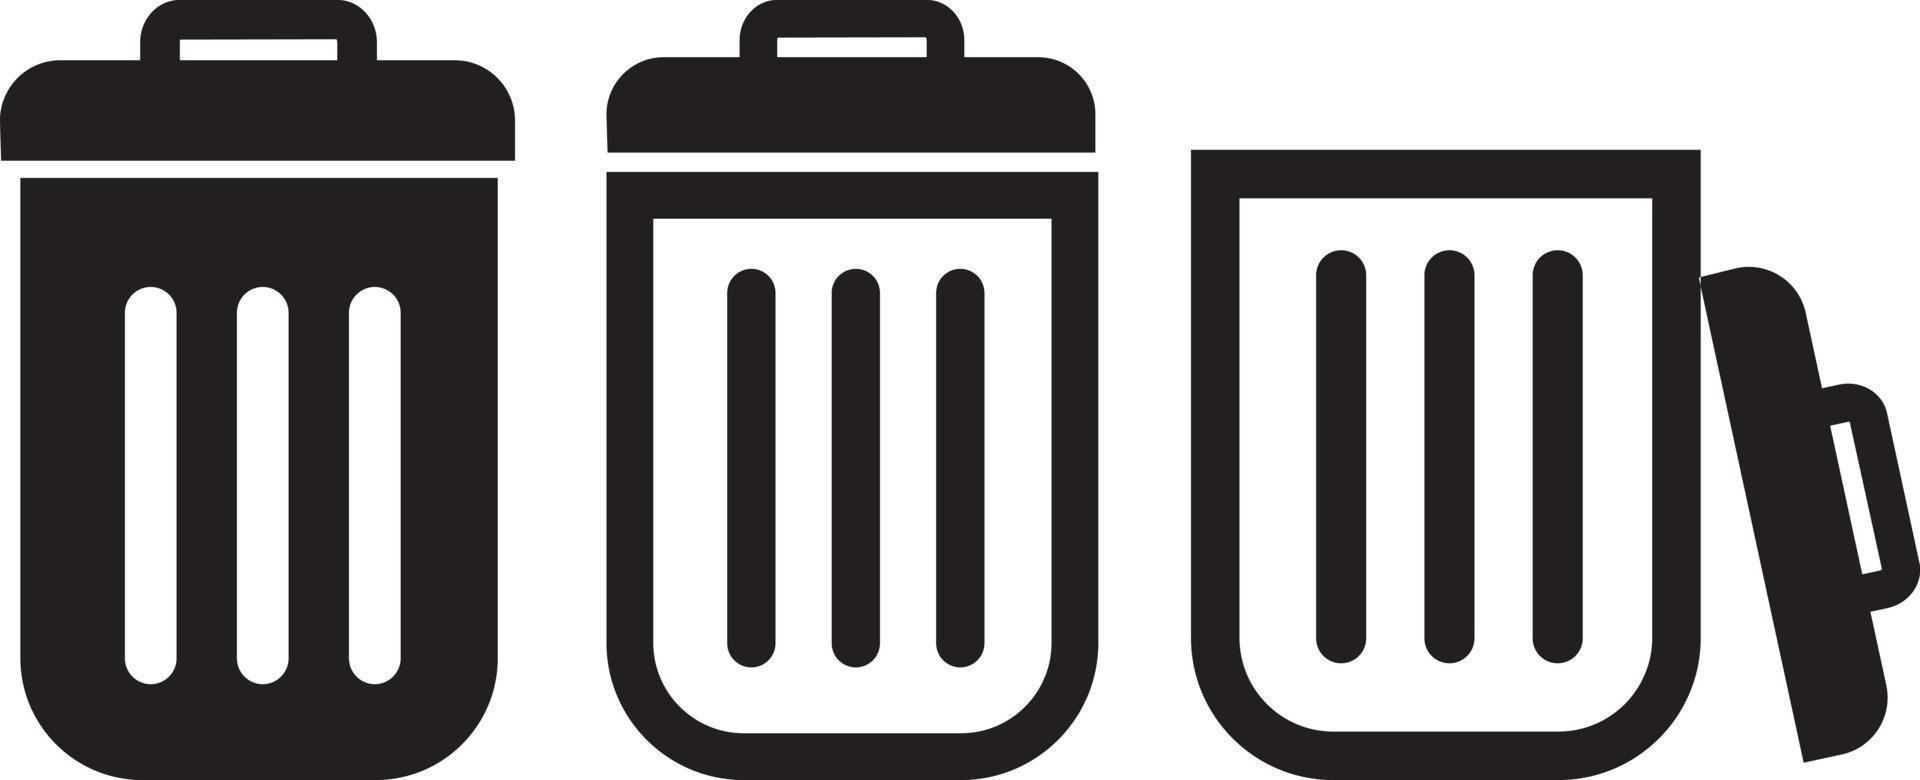 trash can. Bin icon. Office trash icon. Trash bin icon. trash can, garbage can, rubbish bin icon vector